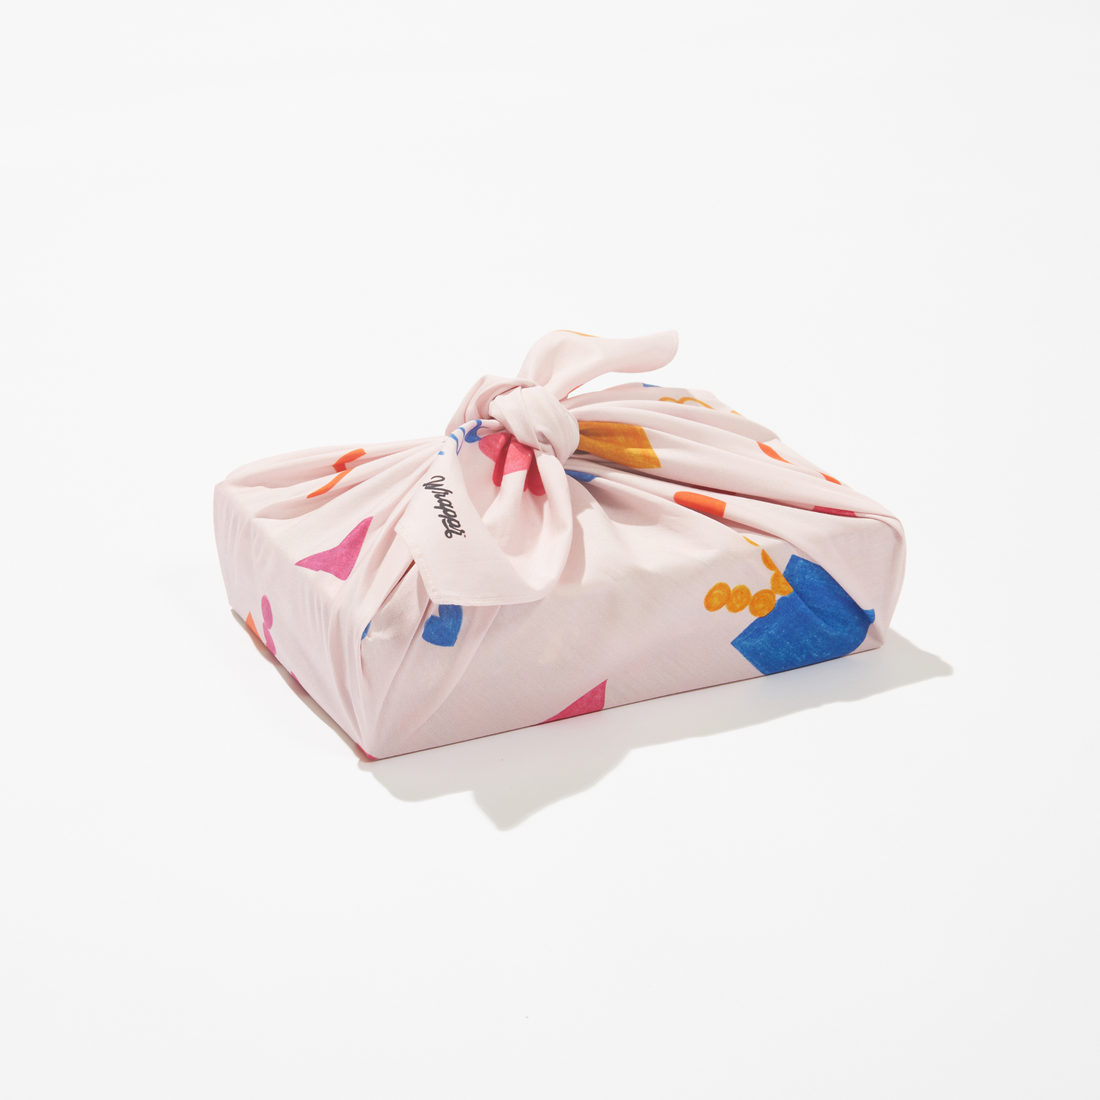 Gift of Giving | 28" Furoshiki Gift Wrap by Archita Khosla